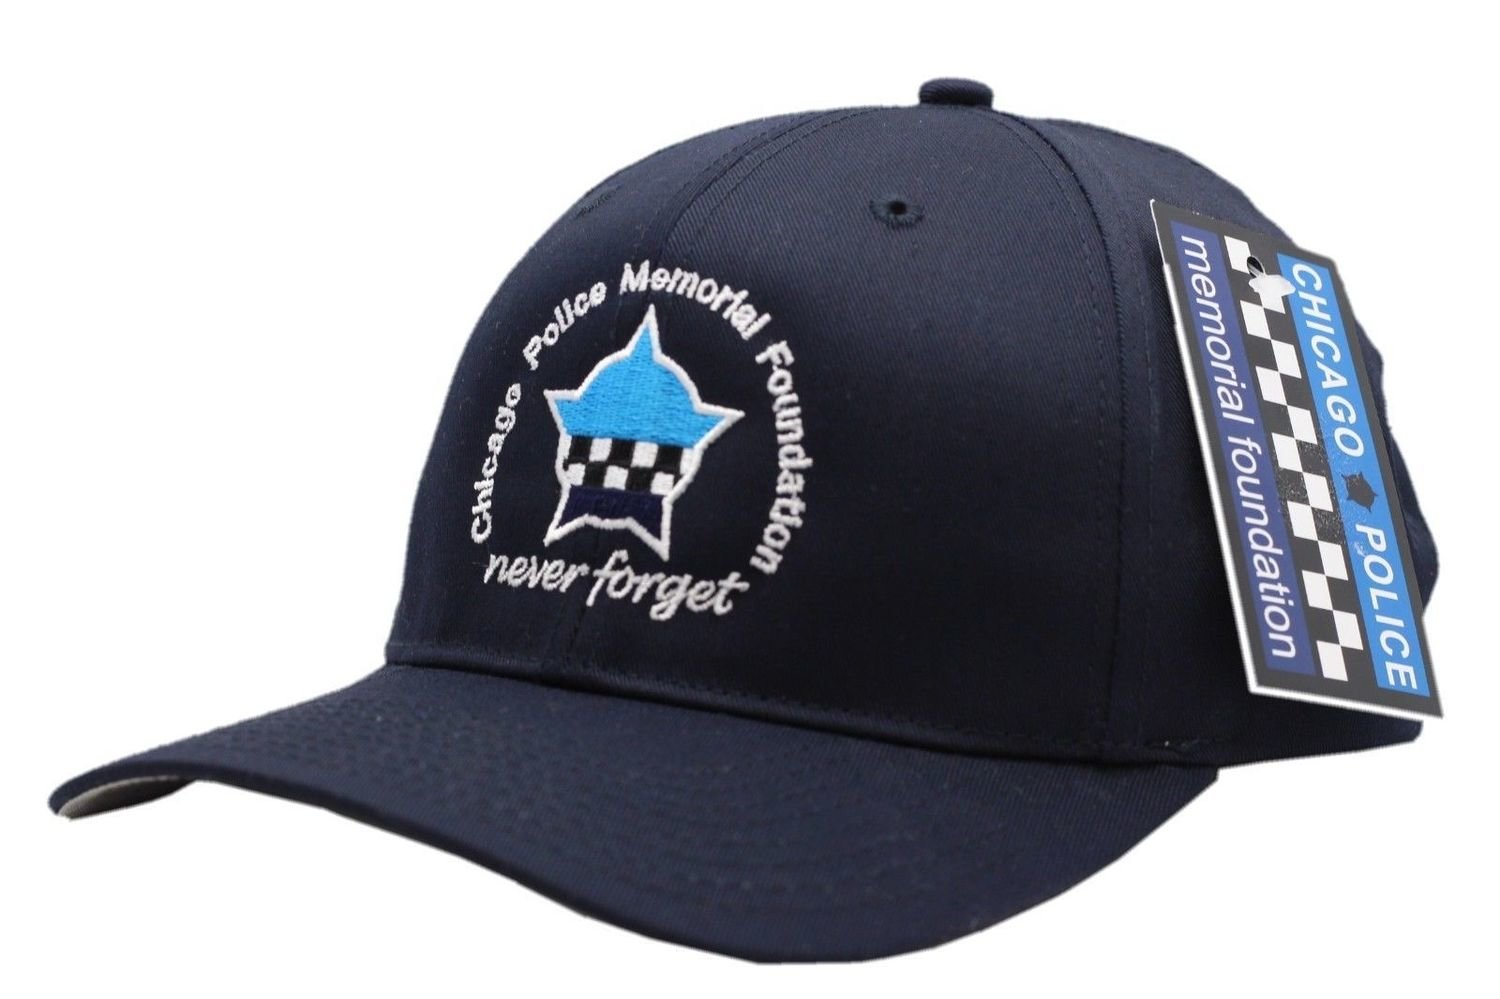 Chicago Police Memorial Foundation Adjustable Hat Wrigley Field Chicago 